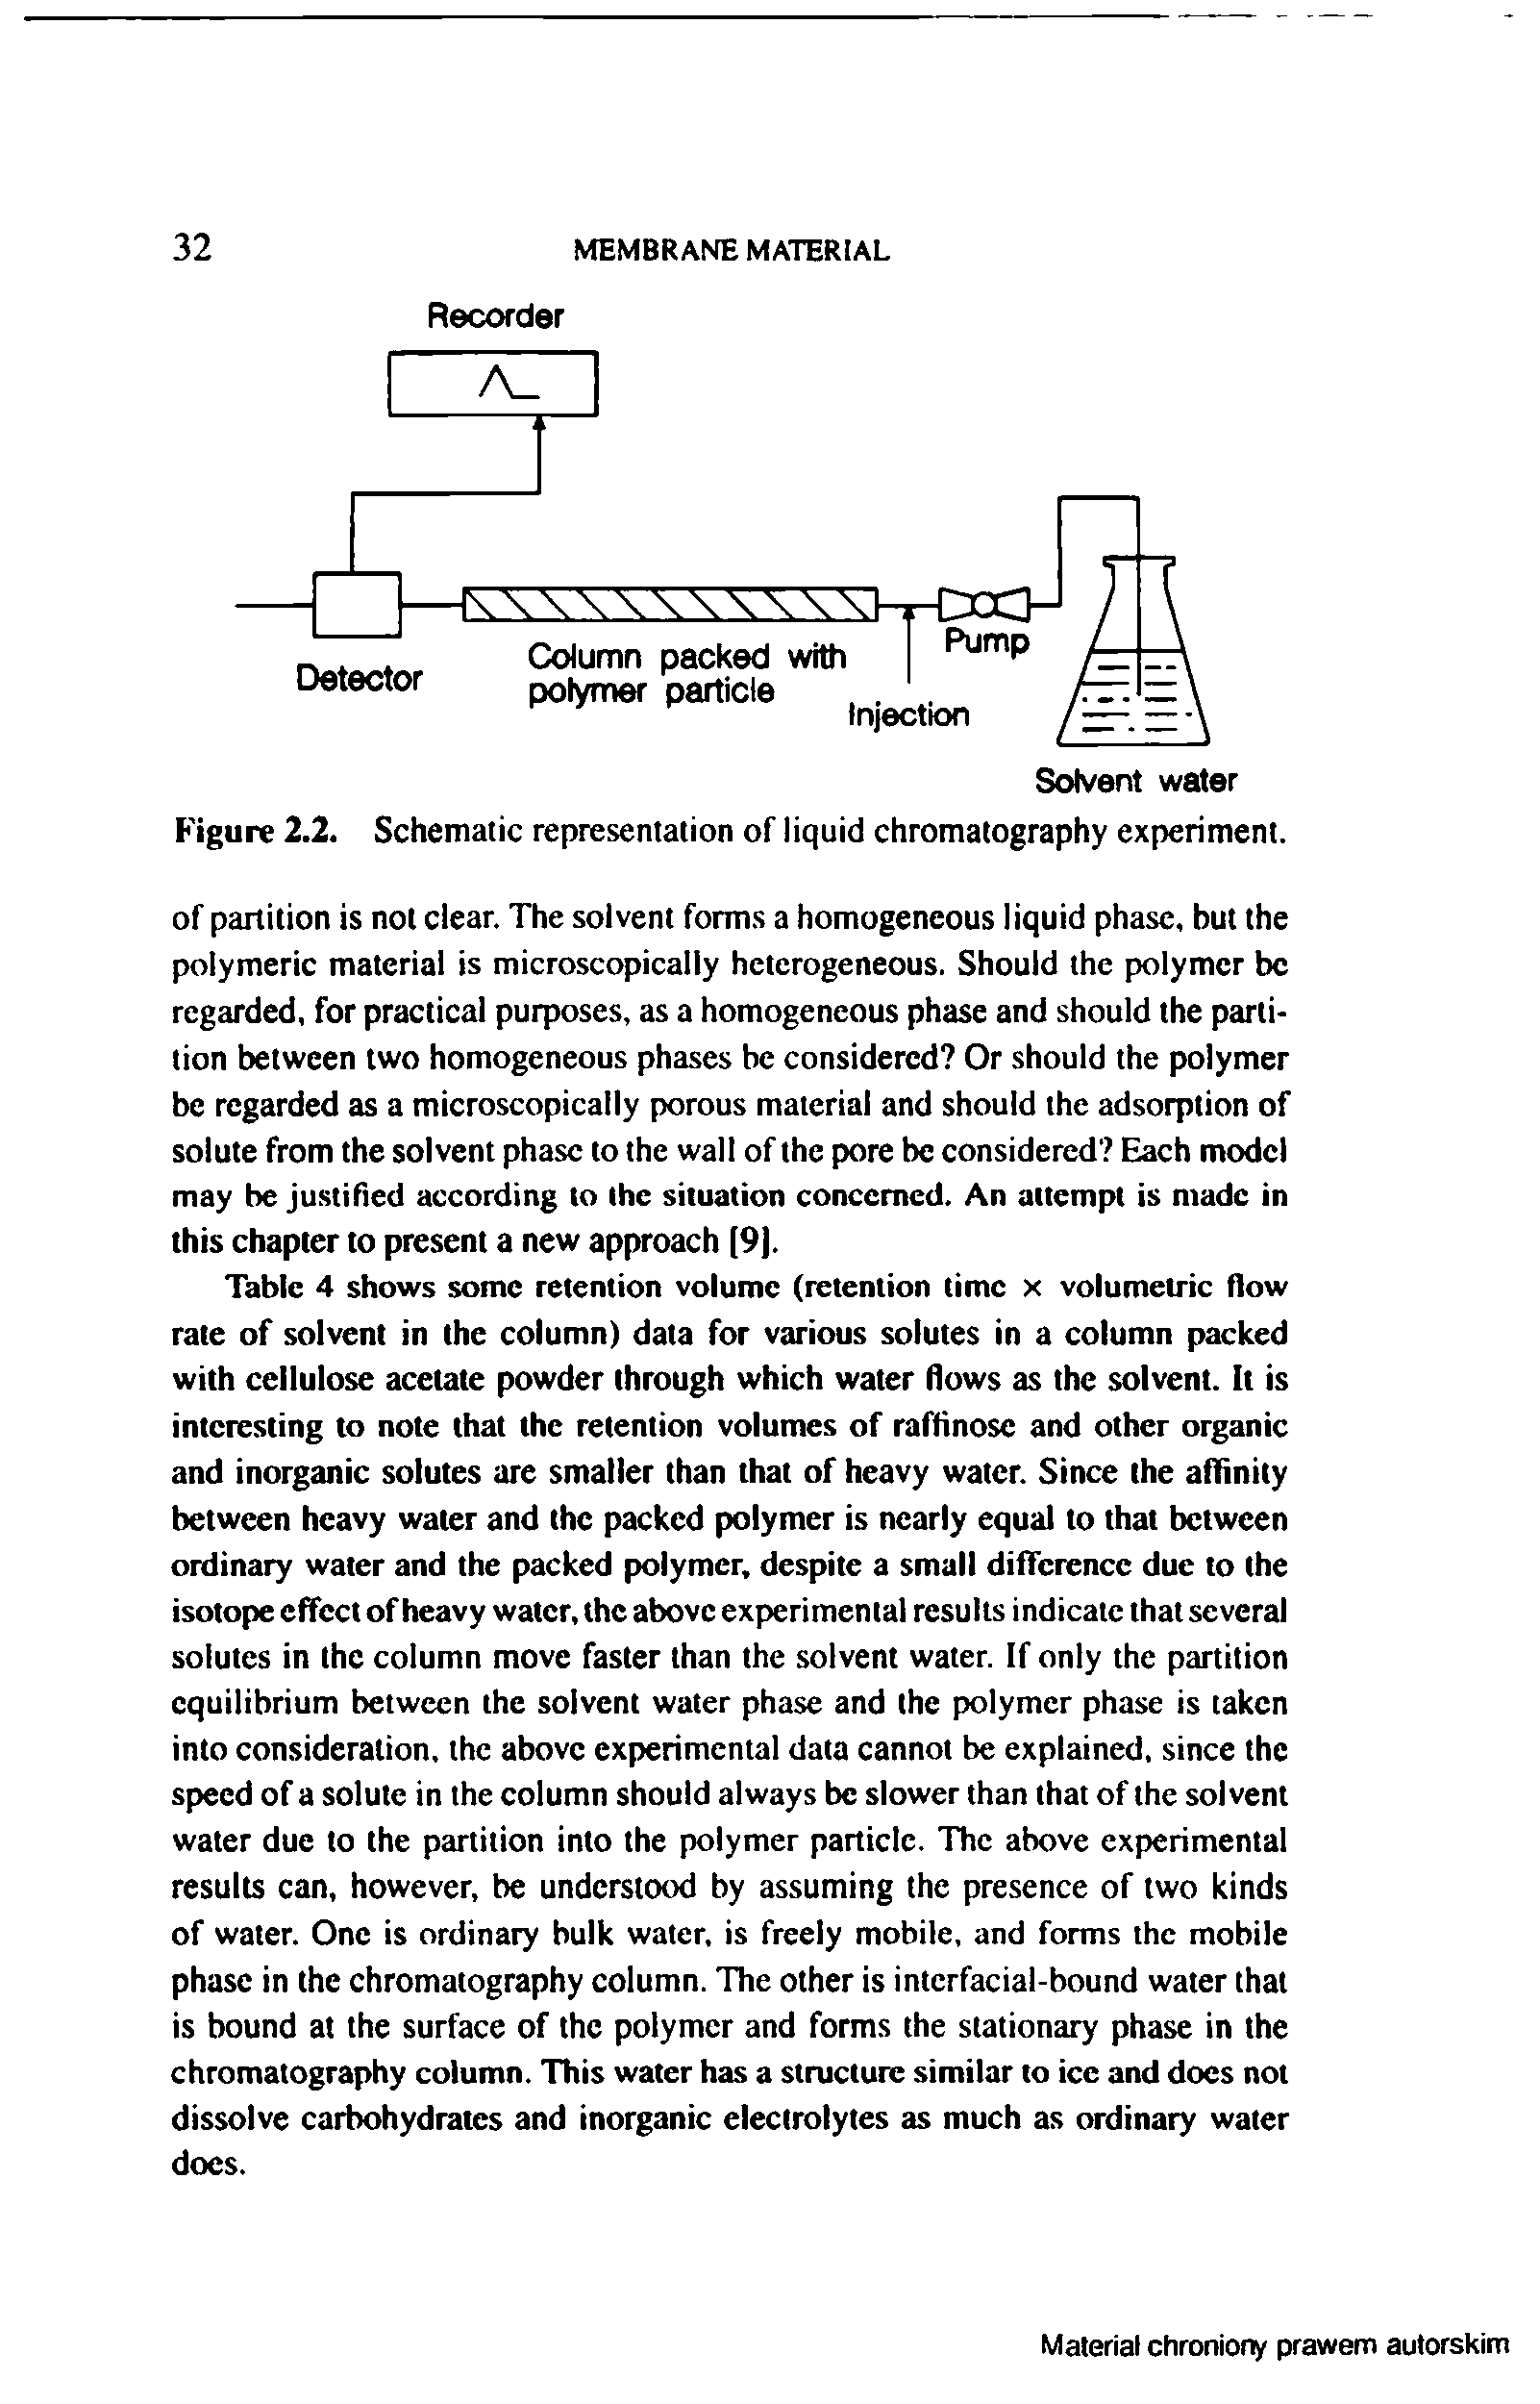 Figure 2.2. Schematic representation of liquid chromatography experiment.